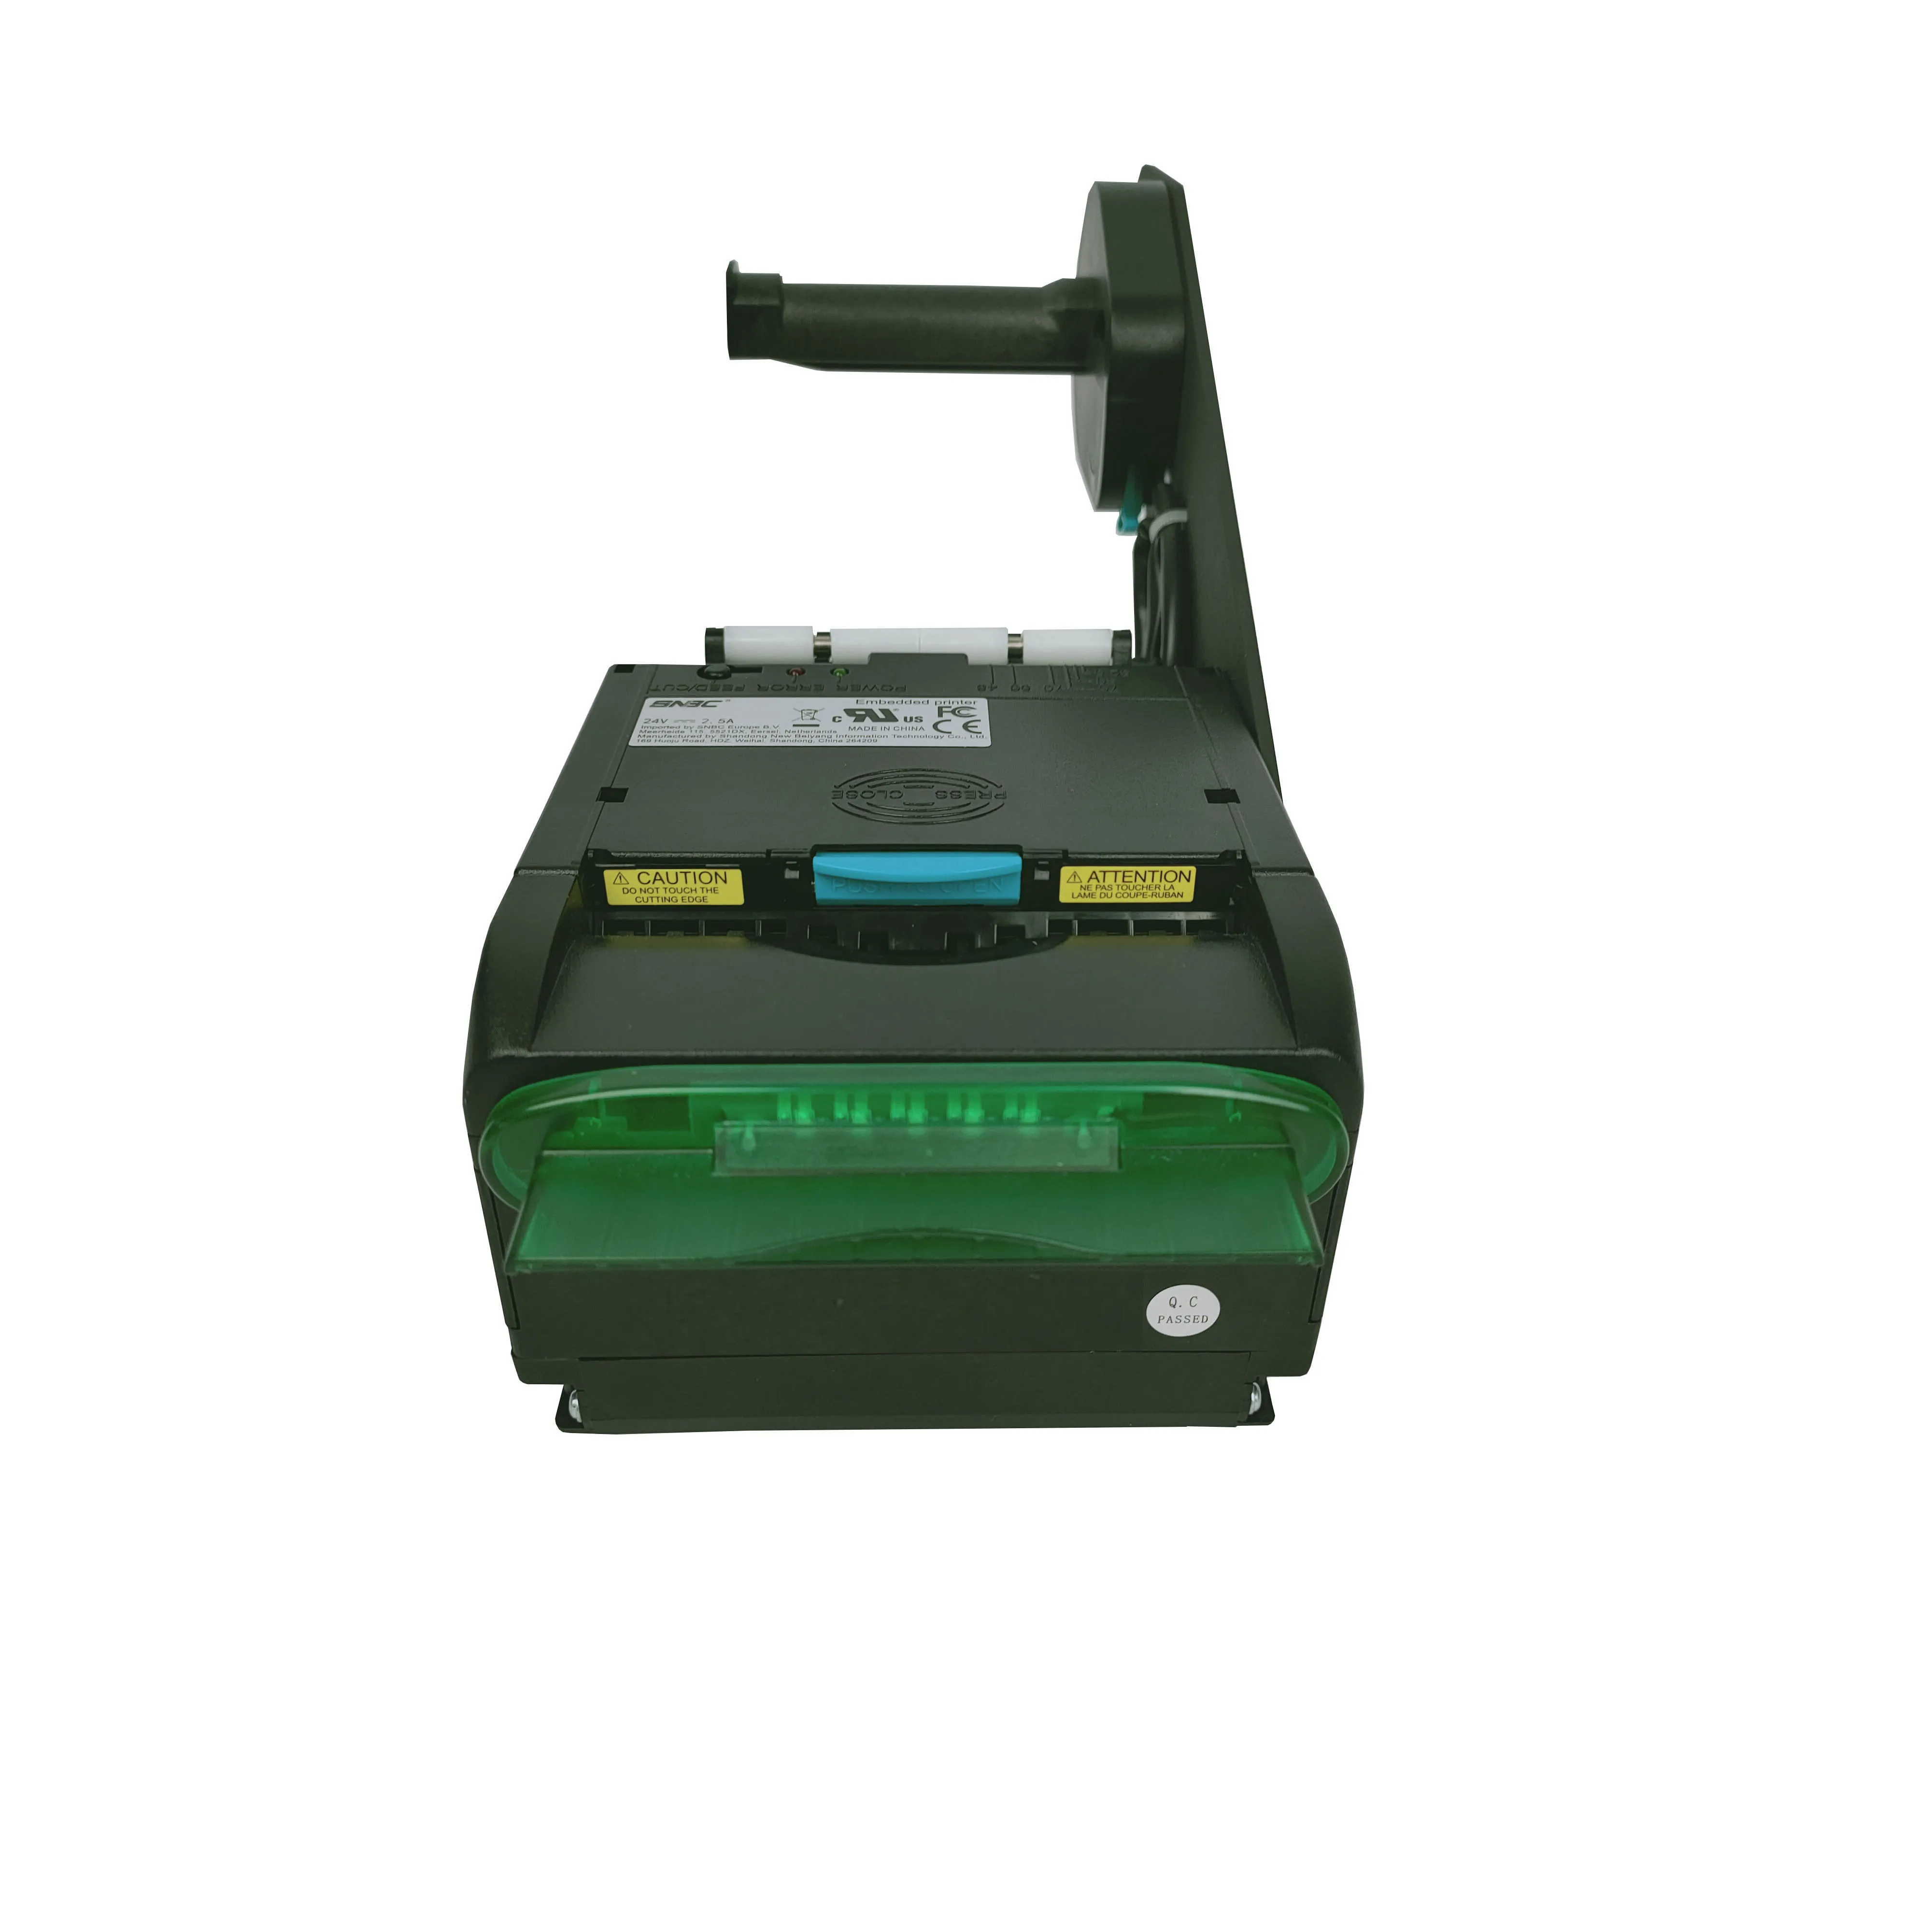 

SNBC KT800 High Speed Vending Machine 80mm Embedded Printer Kiosk Printer with Auto Cutter